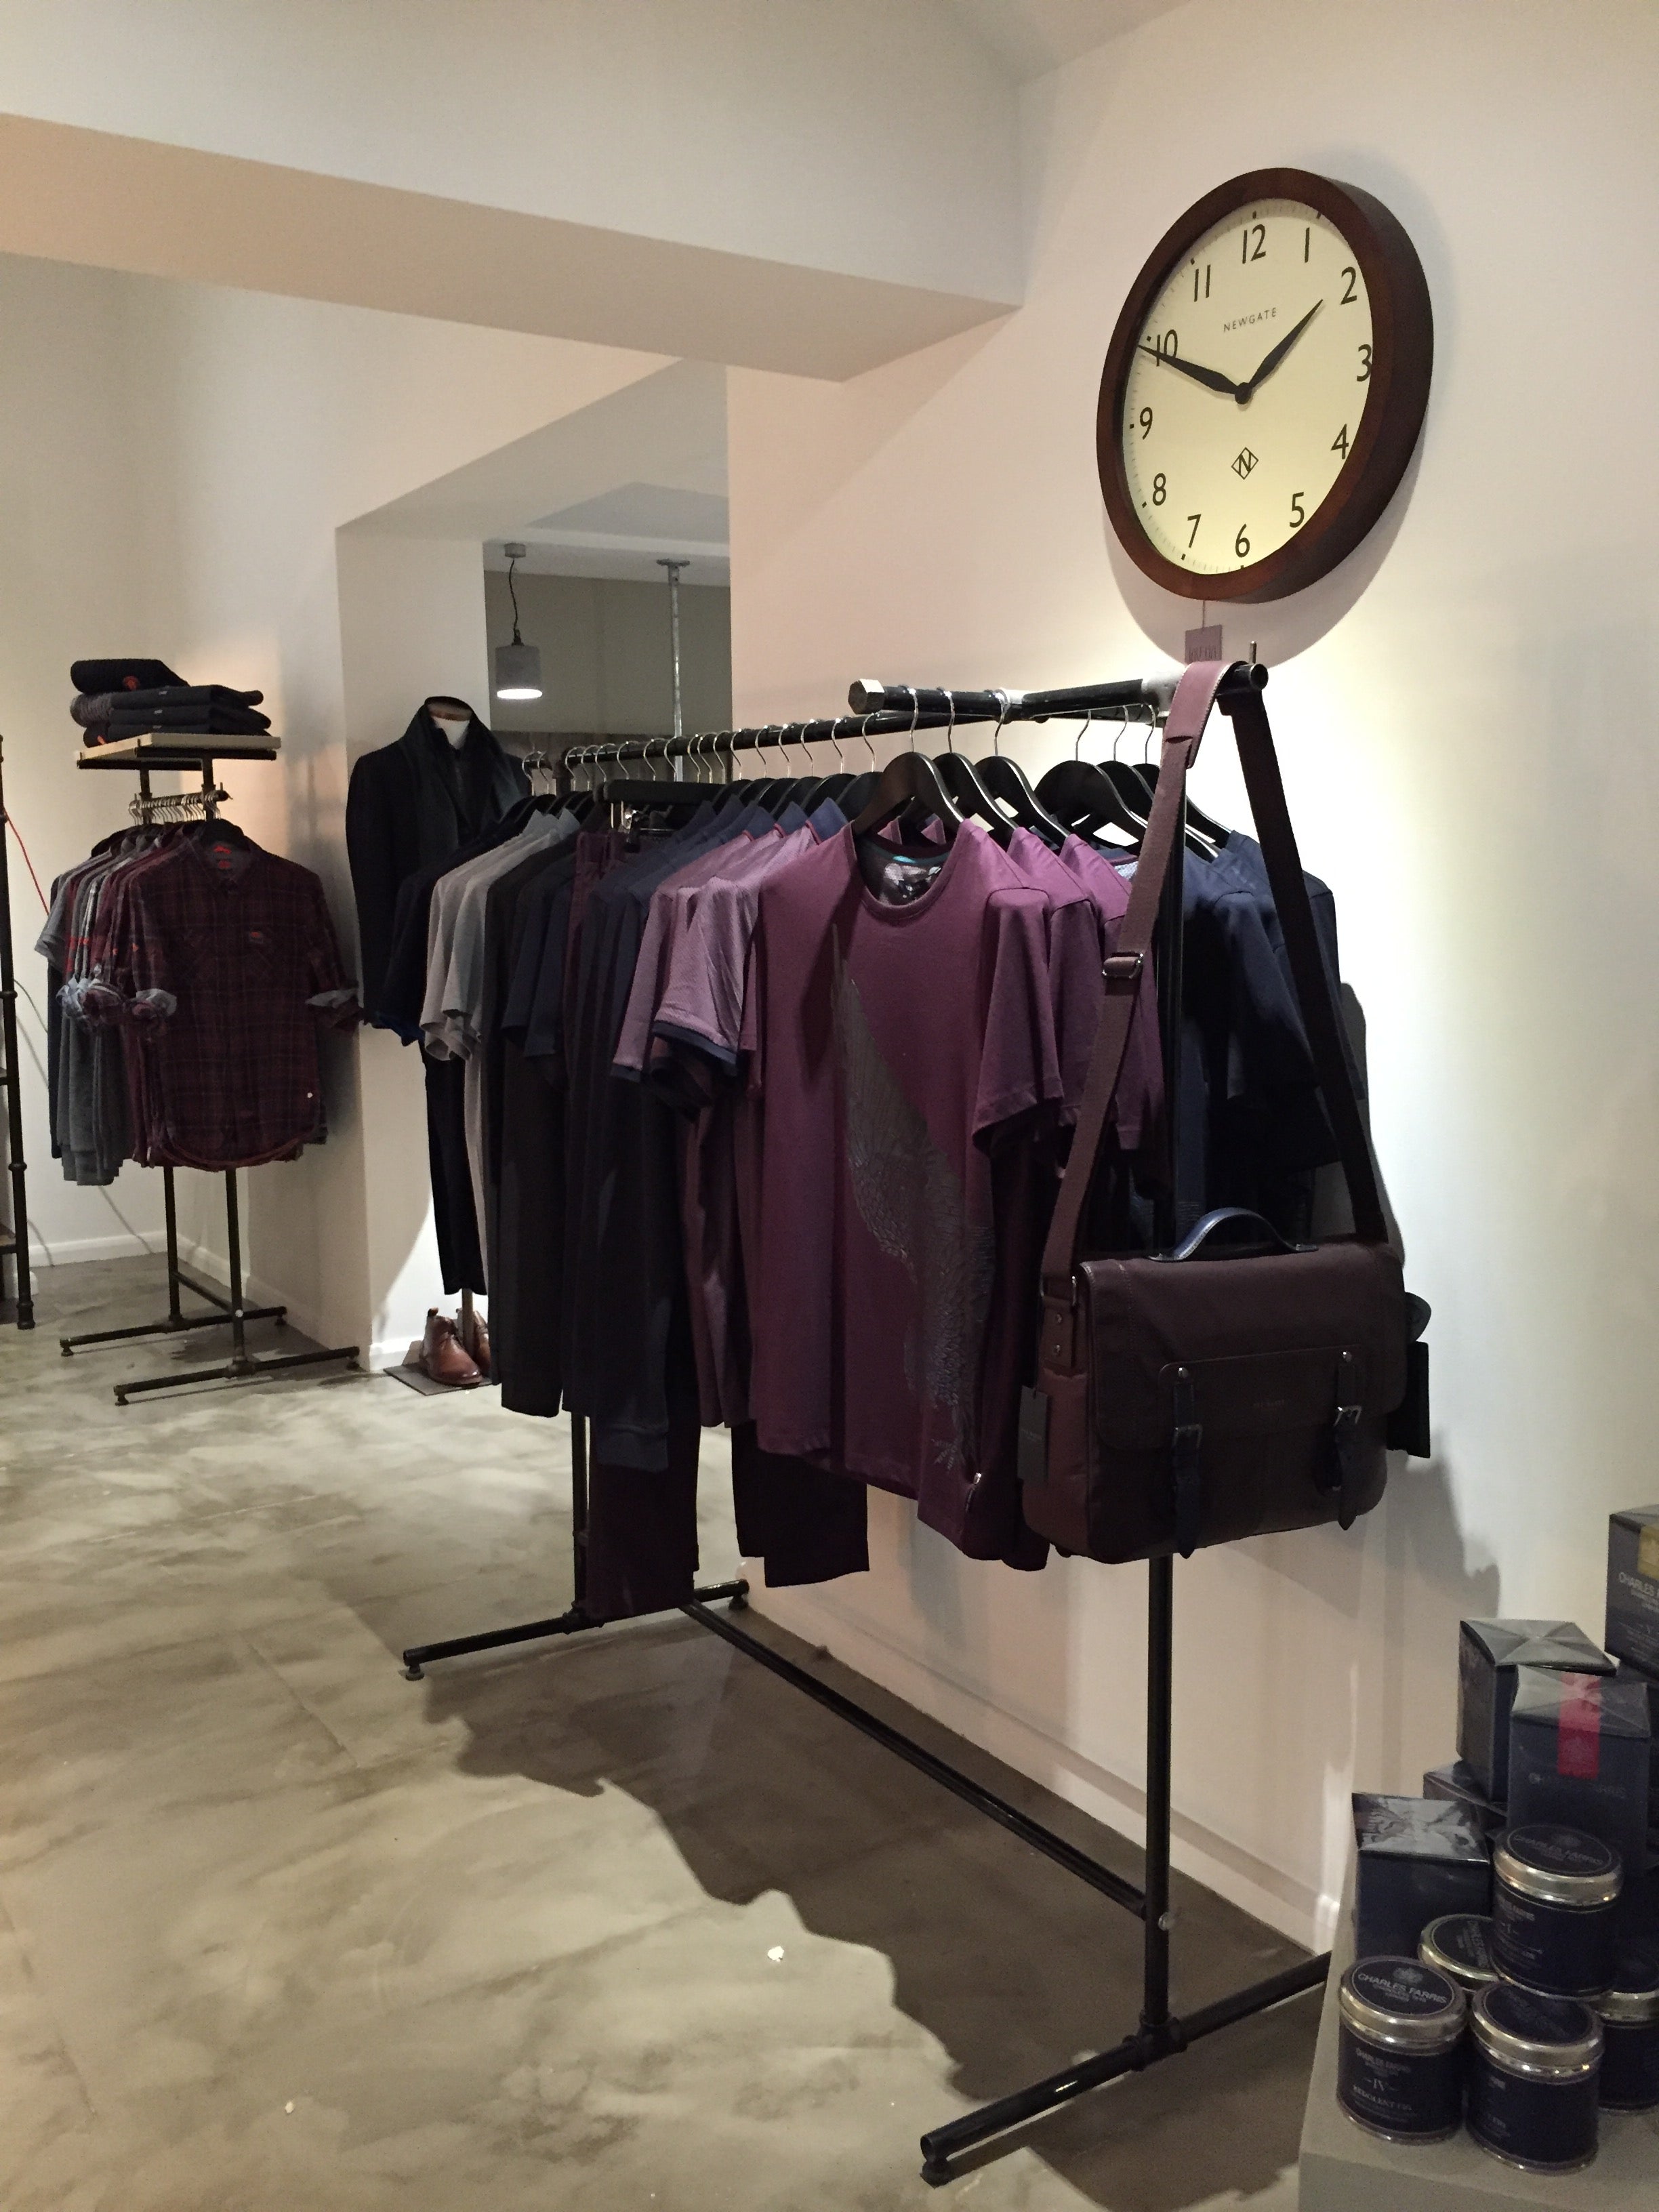 Javelin, sudbury, menswear fashion, customer space, retail interior design, industrial look